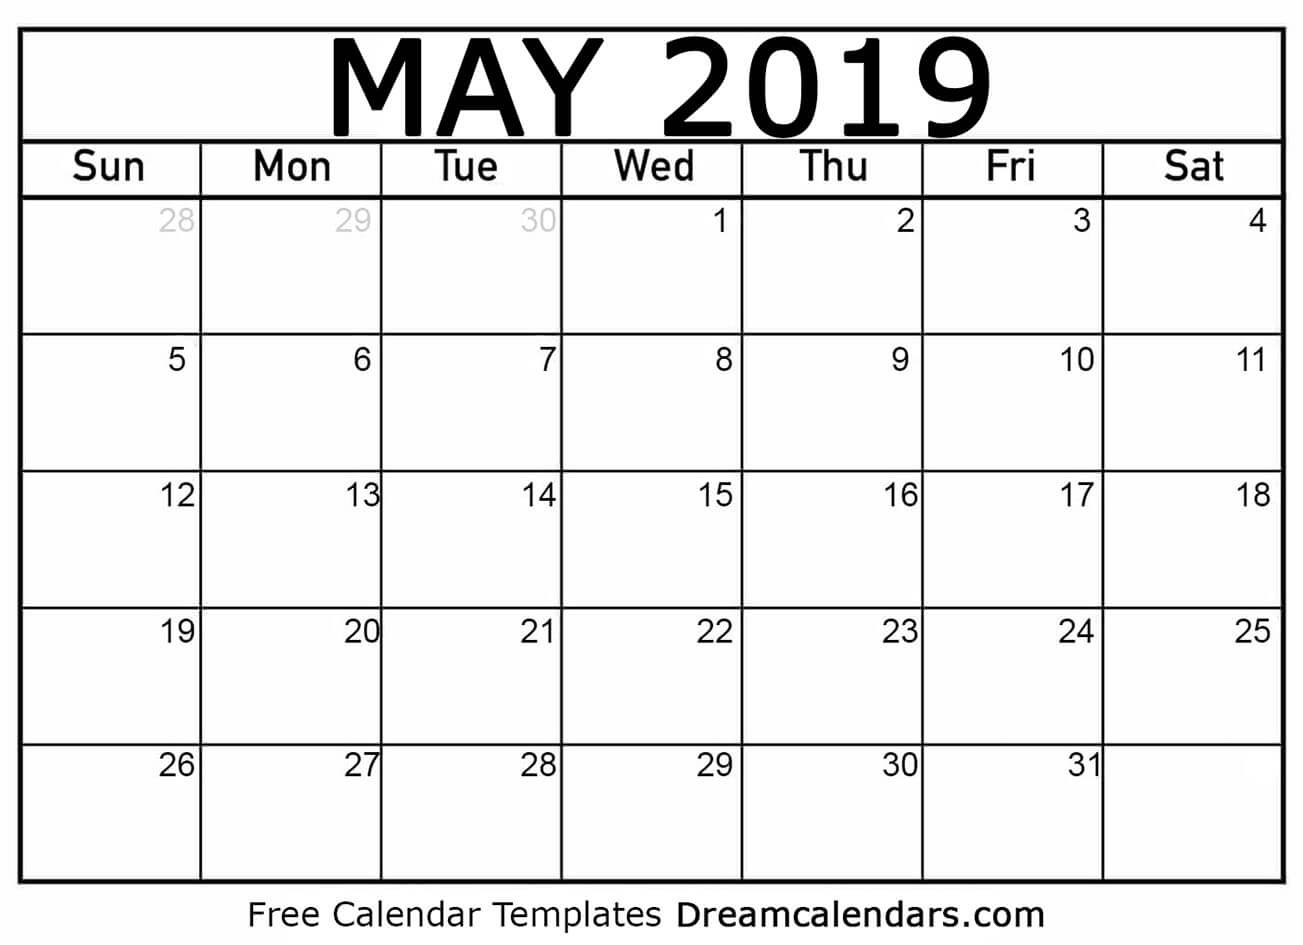 Dream Calendars Make Your Calendar Template Blog Blank Printable May 2019 Calendar